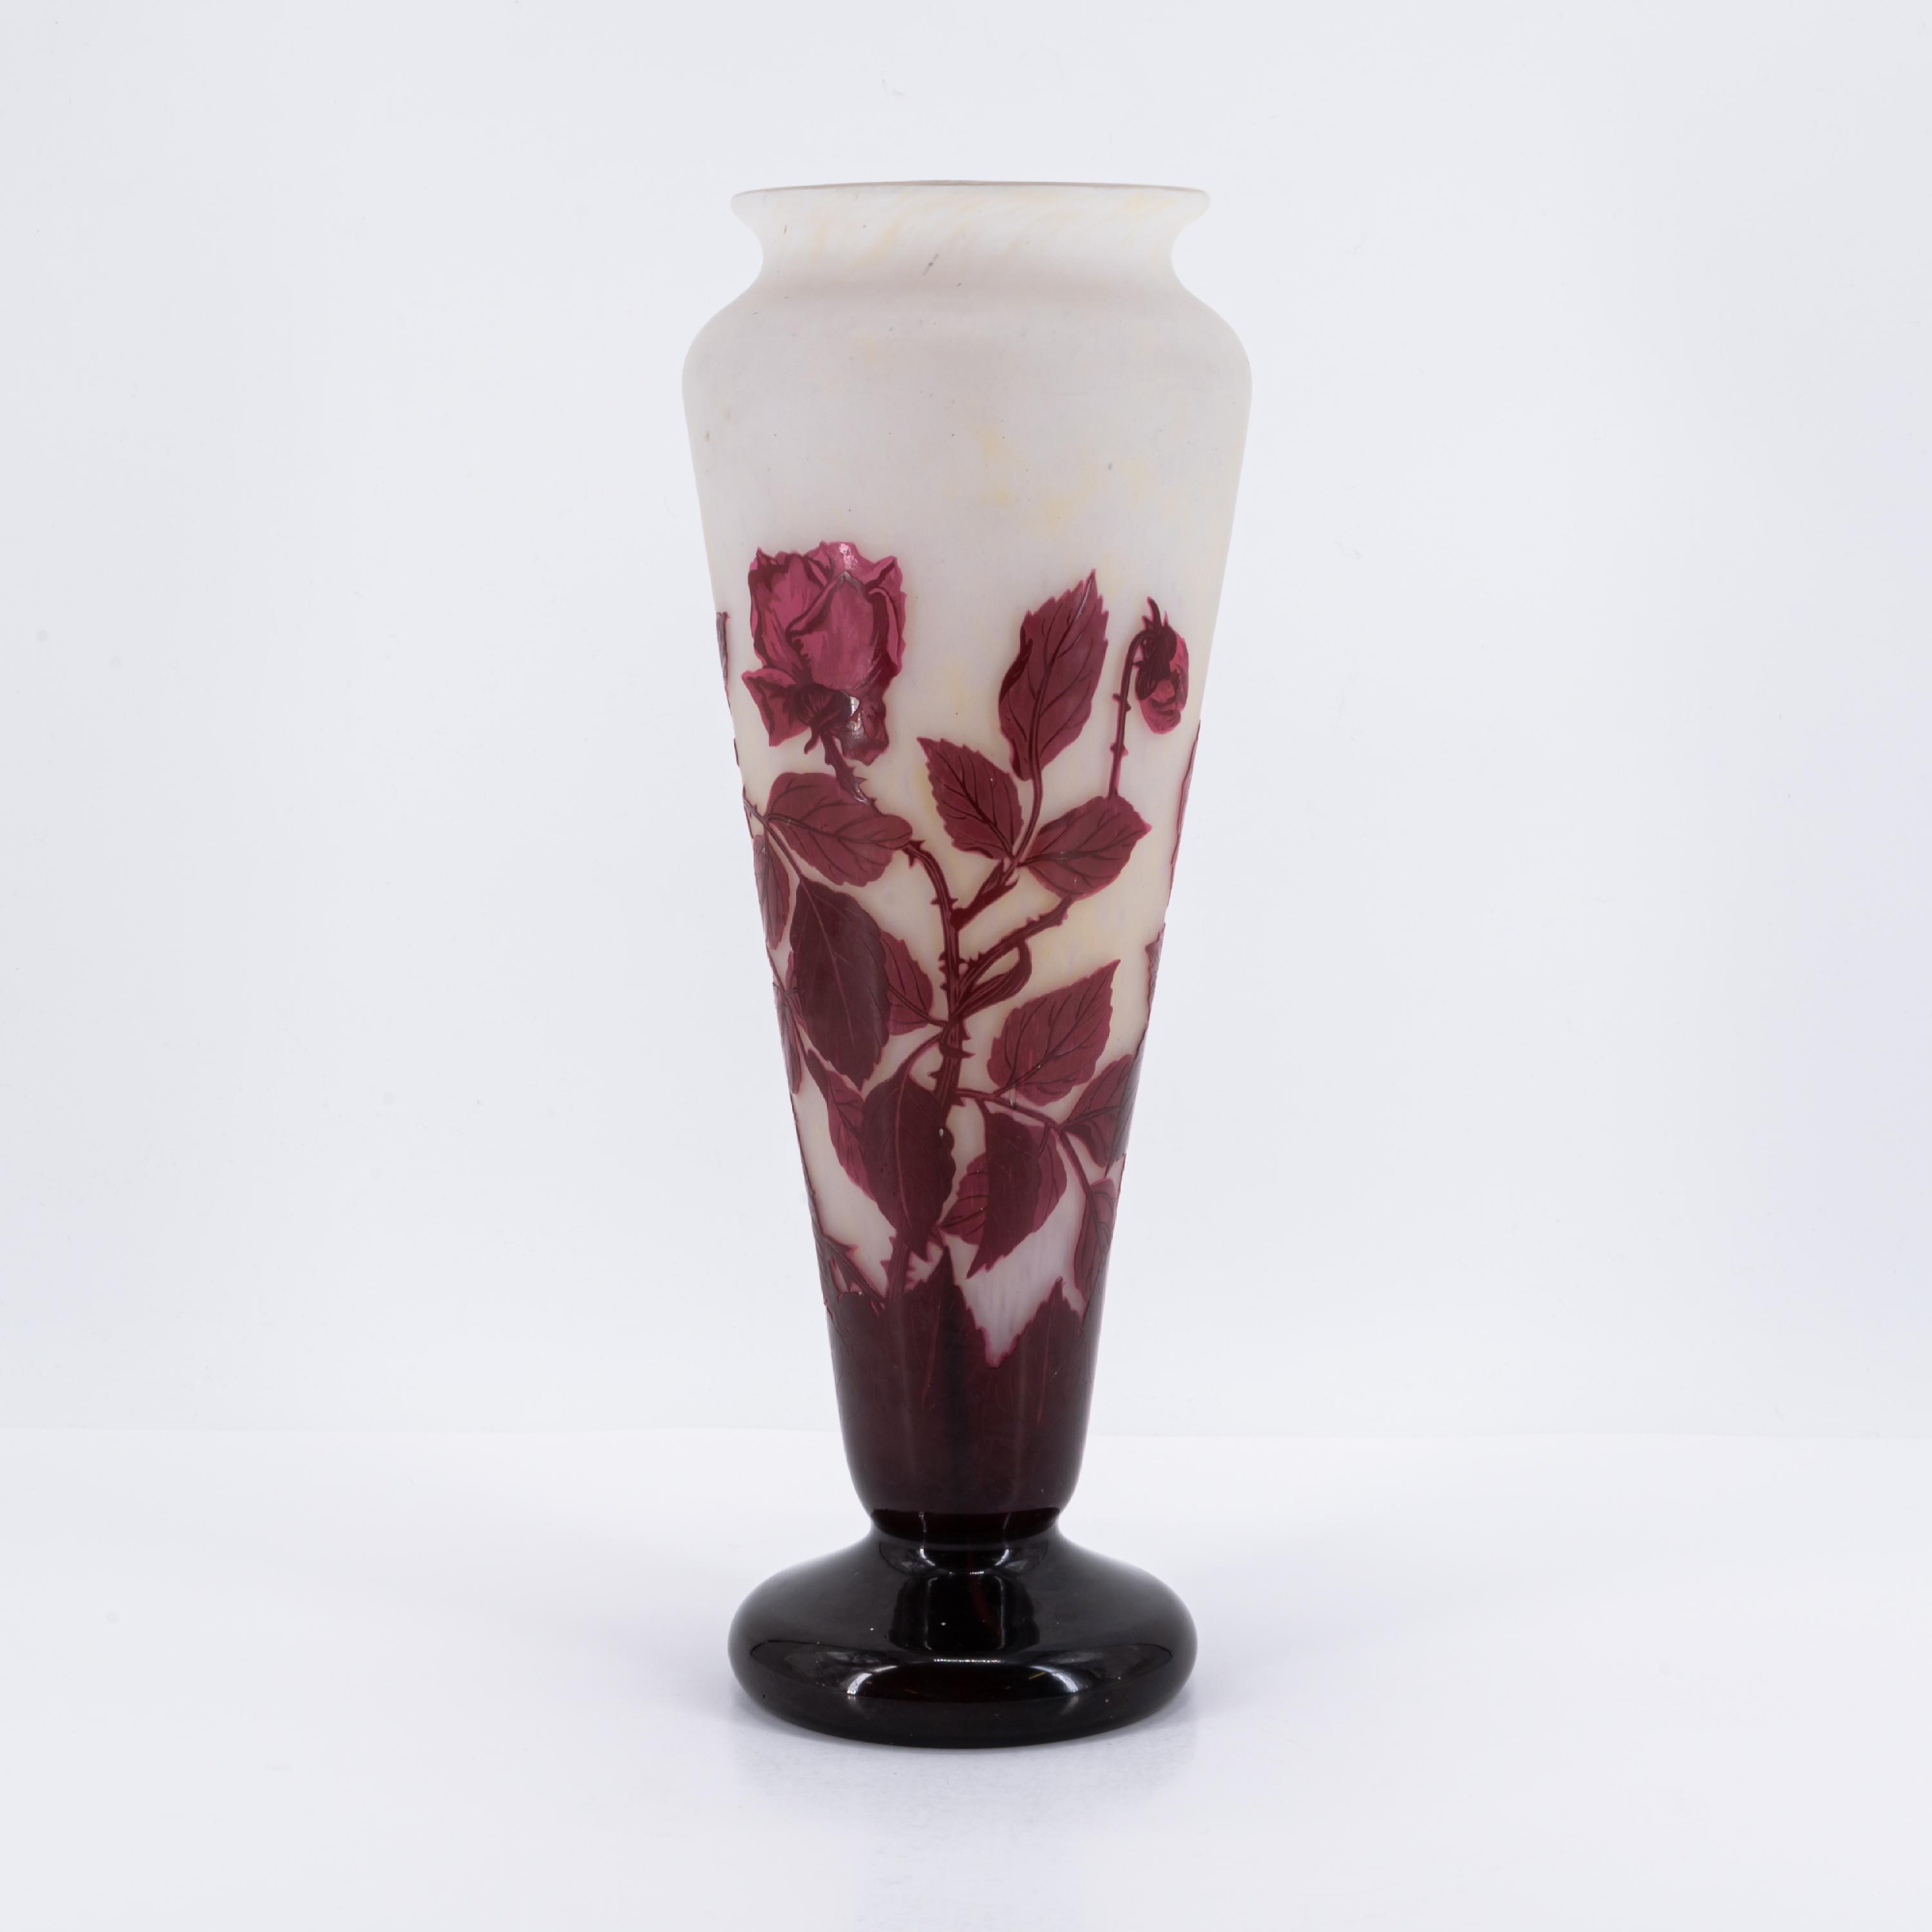 Andre Delatte - Grosse Vase mit Rosenblueten, 76257-16, Van Ham Kunstauktionen